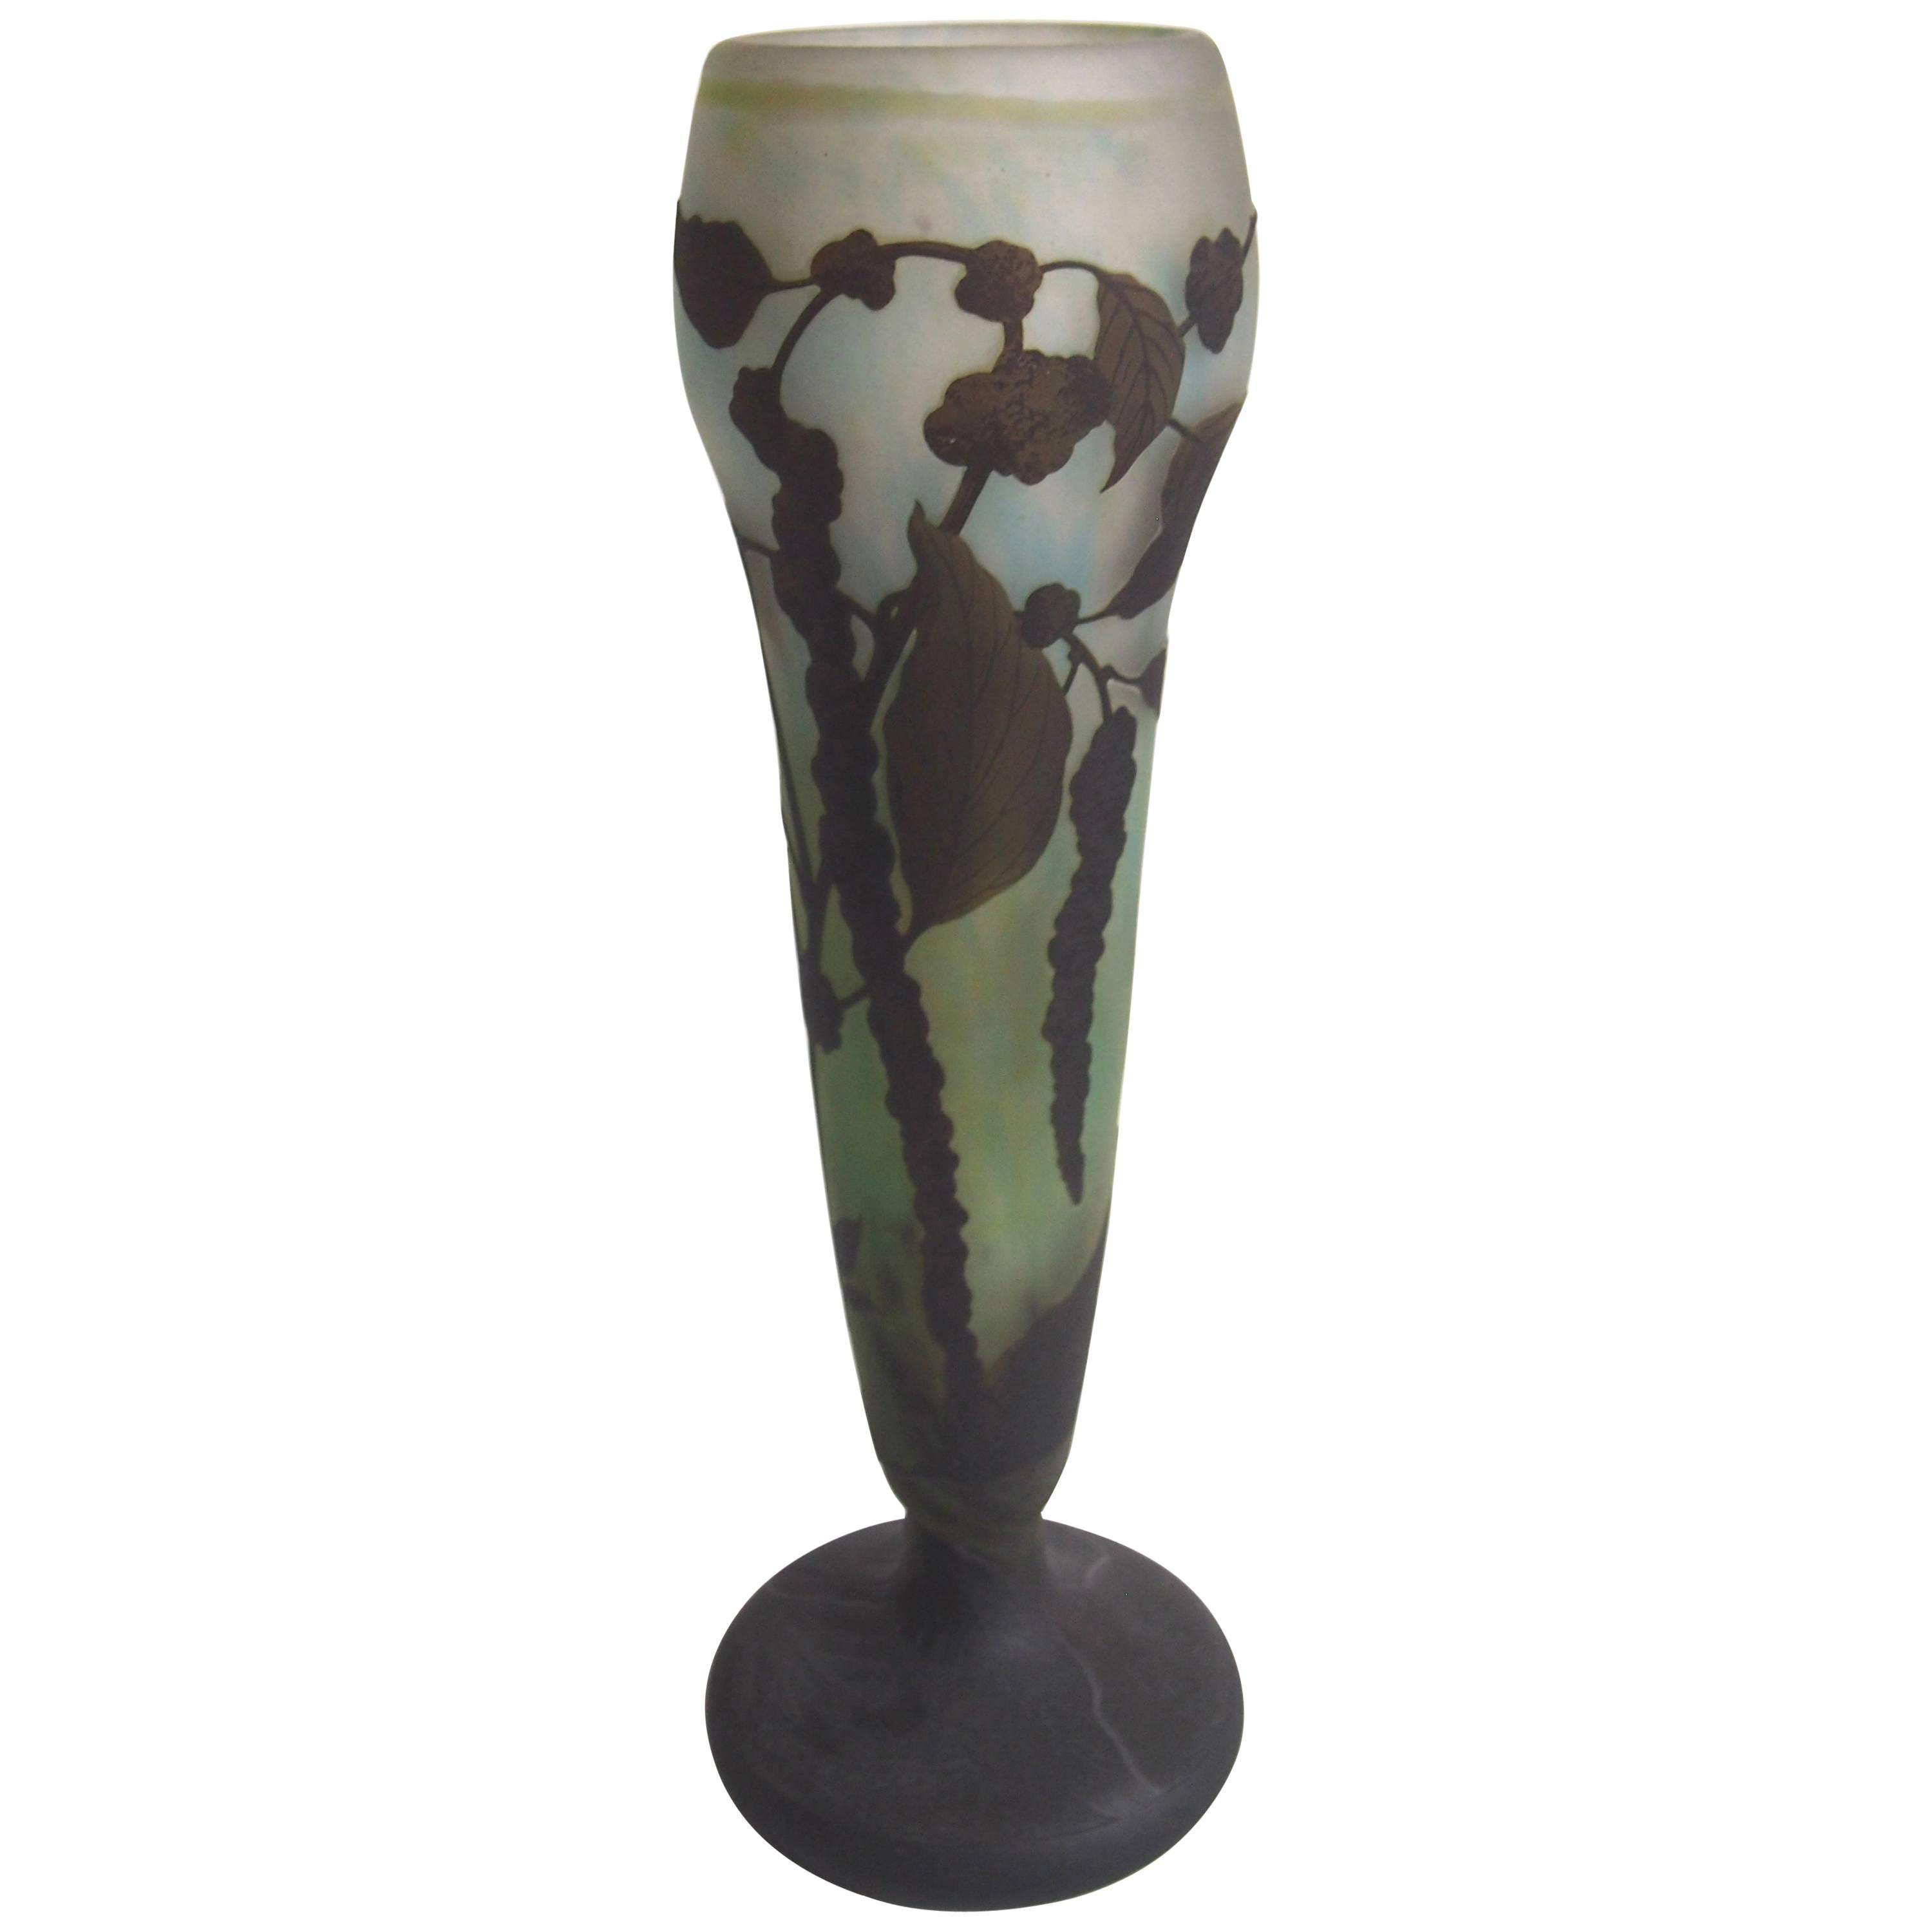 French Art Nouveau Daum Carved and Cameo Glass Botanical Vase c1900